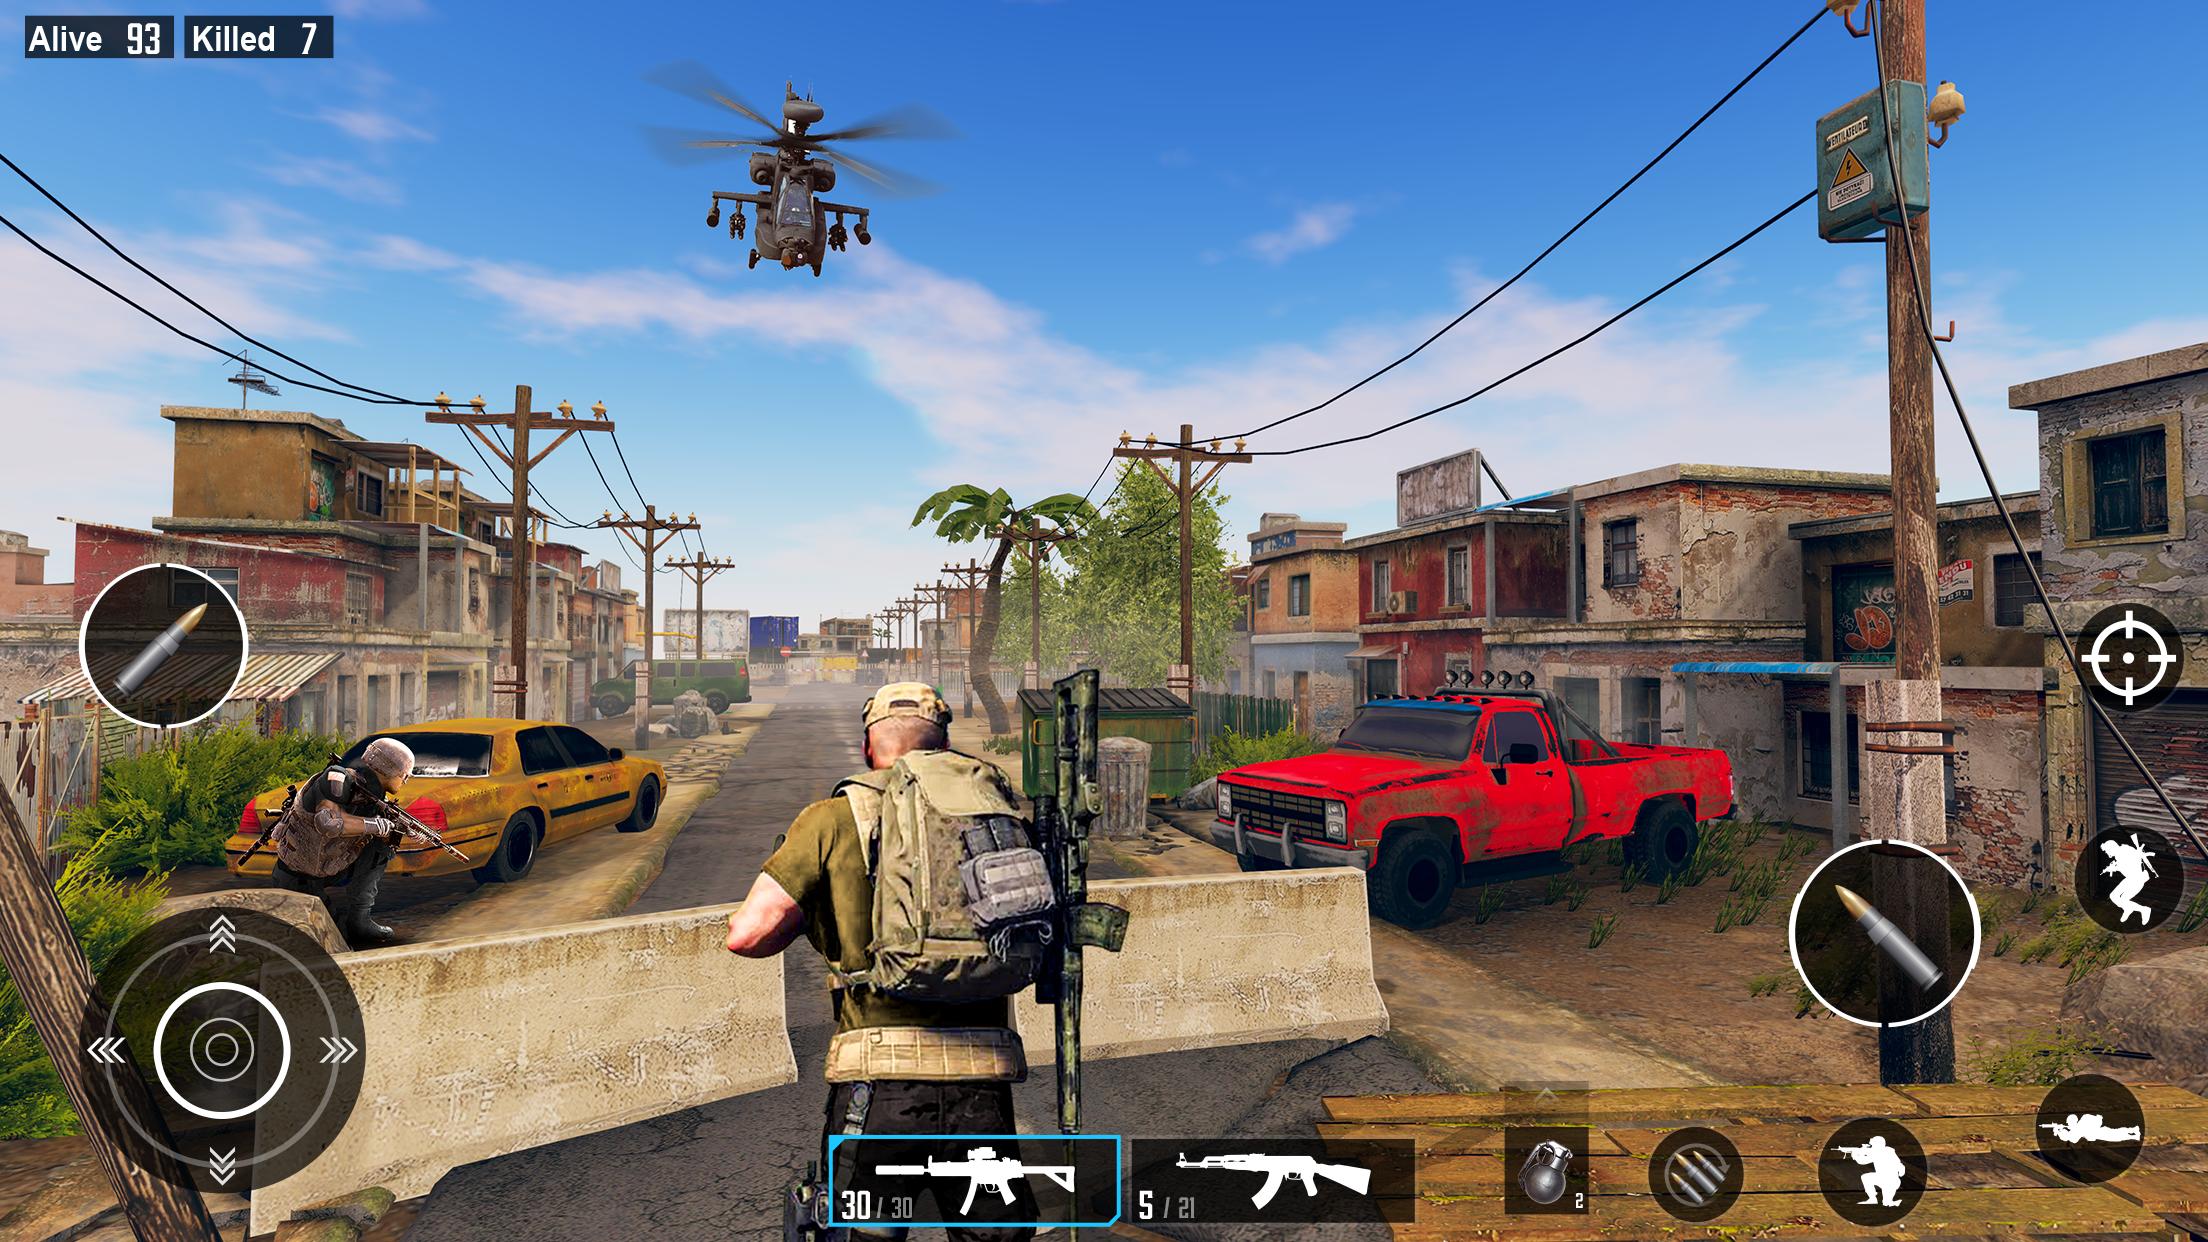 Real Commando Mission - Free Shooting Games 2020 3.5 Screenshot 9